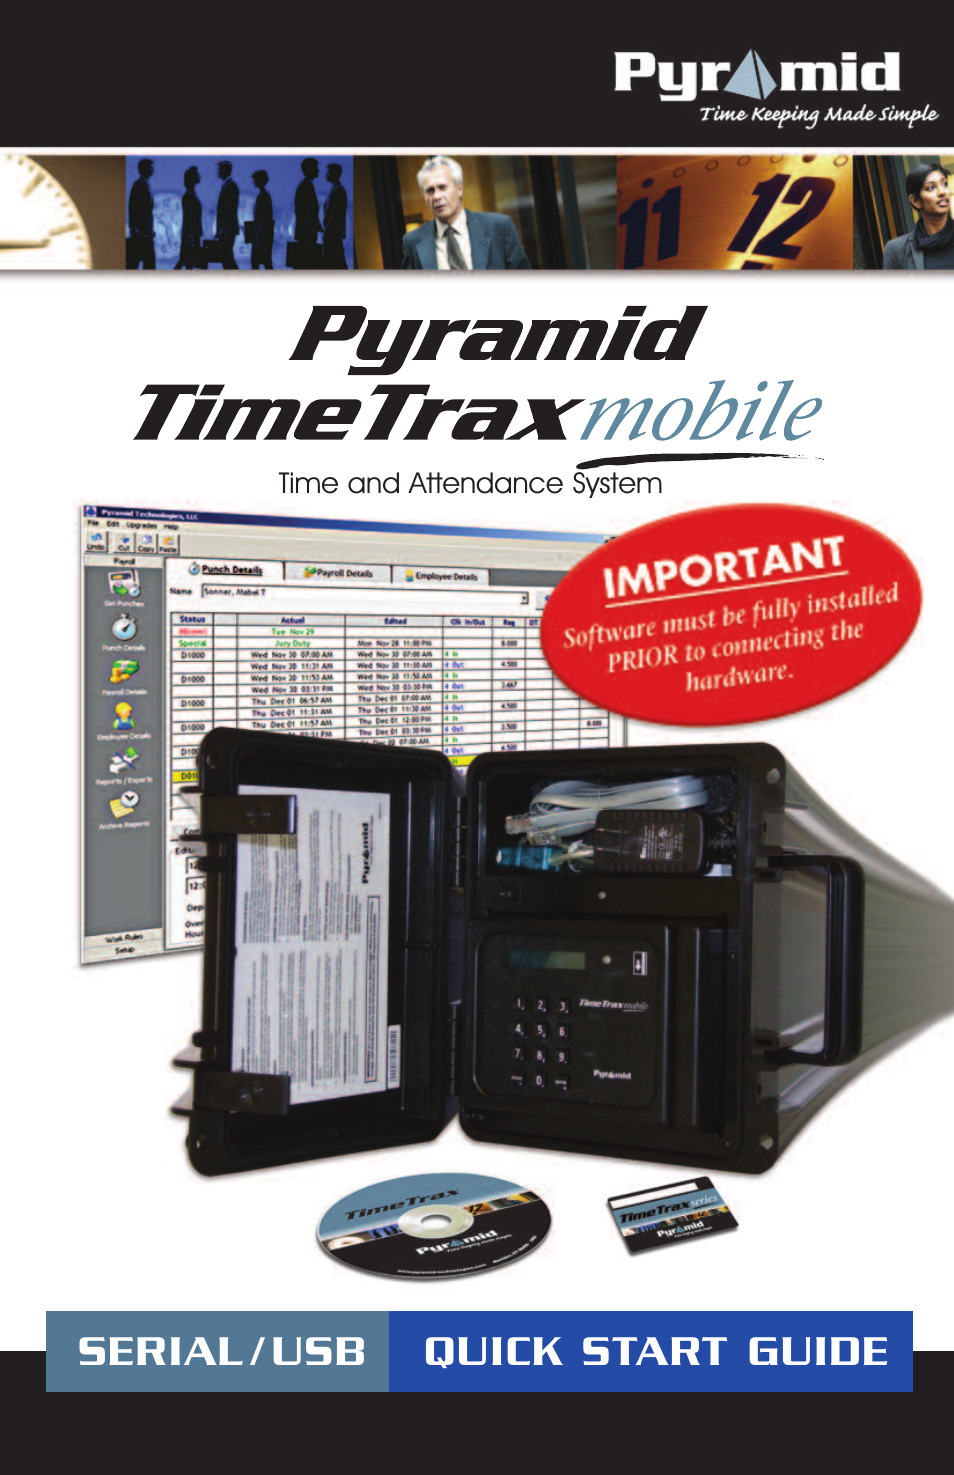 TimeTrax Mobile